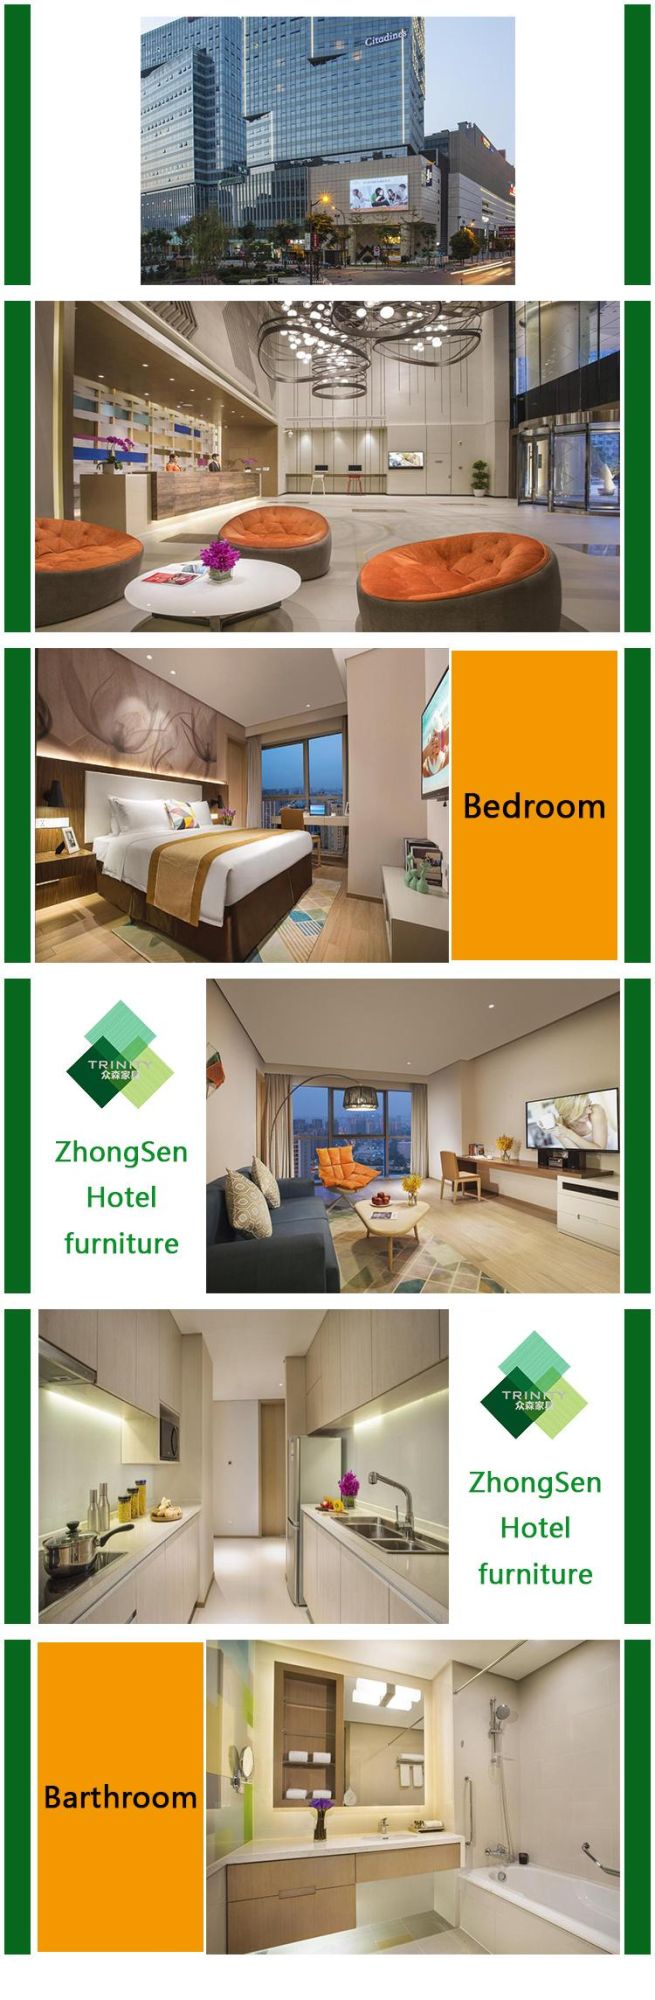 5 Star Hotel Bedroom Furniture China Manufacturer for Hilton Hospitality Room